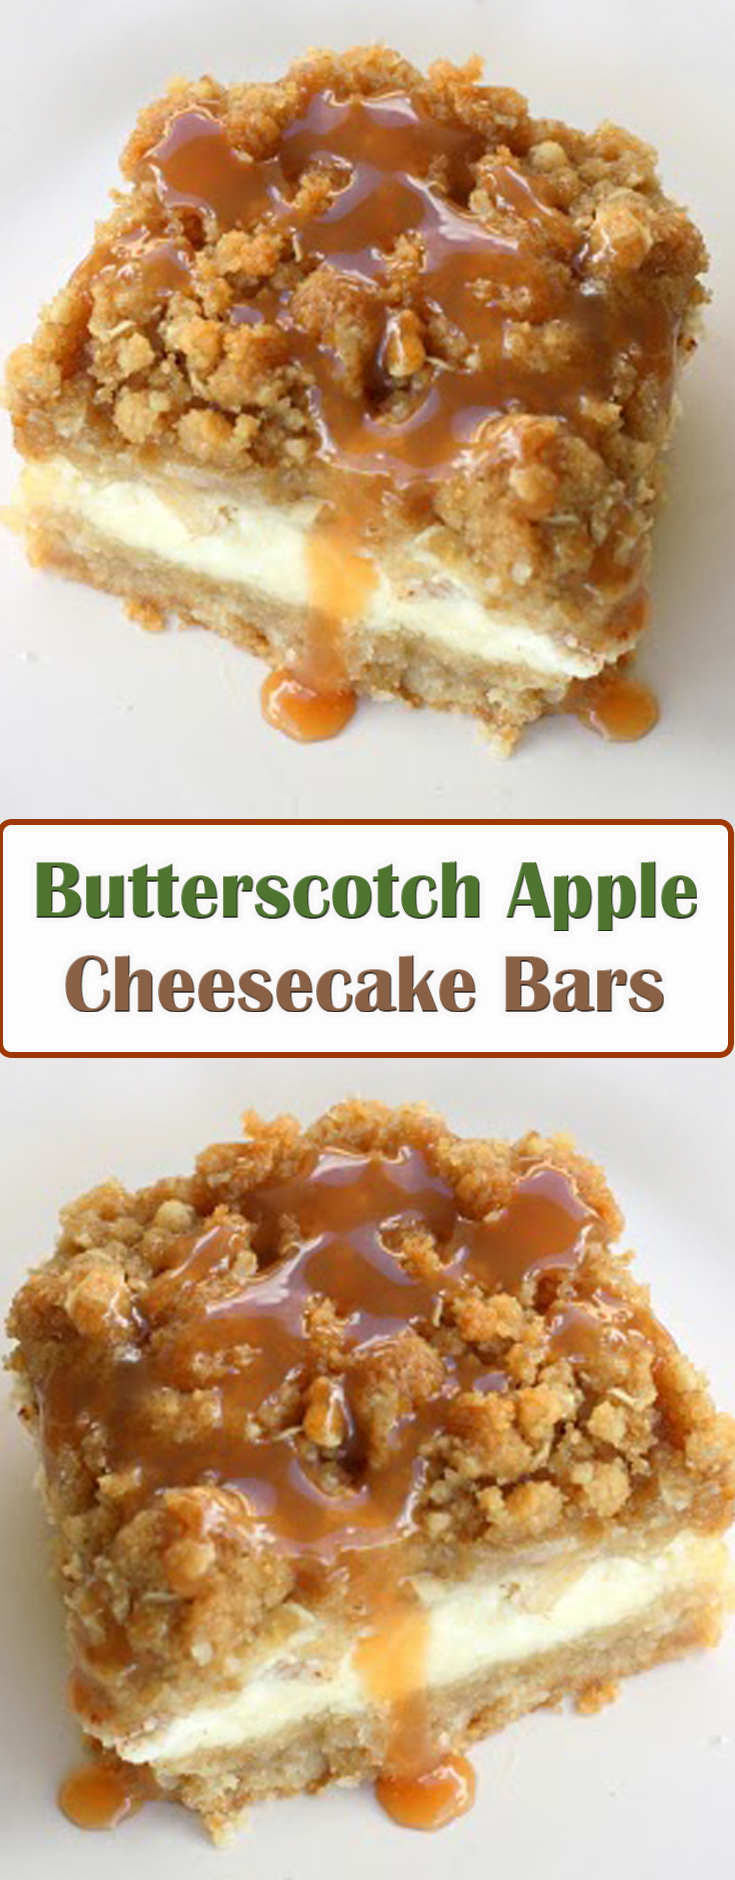 Butterscotch Apple Cheesecake Bars